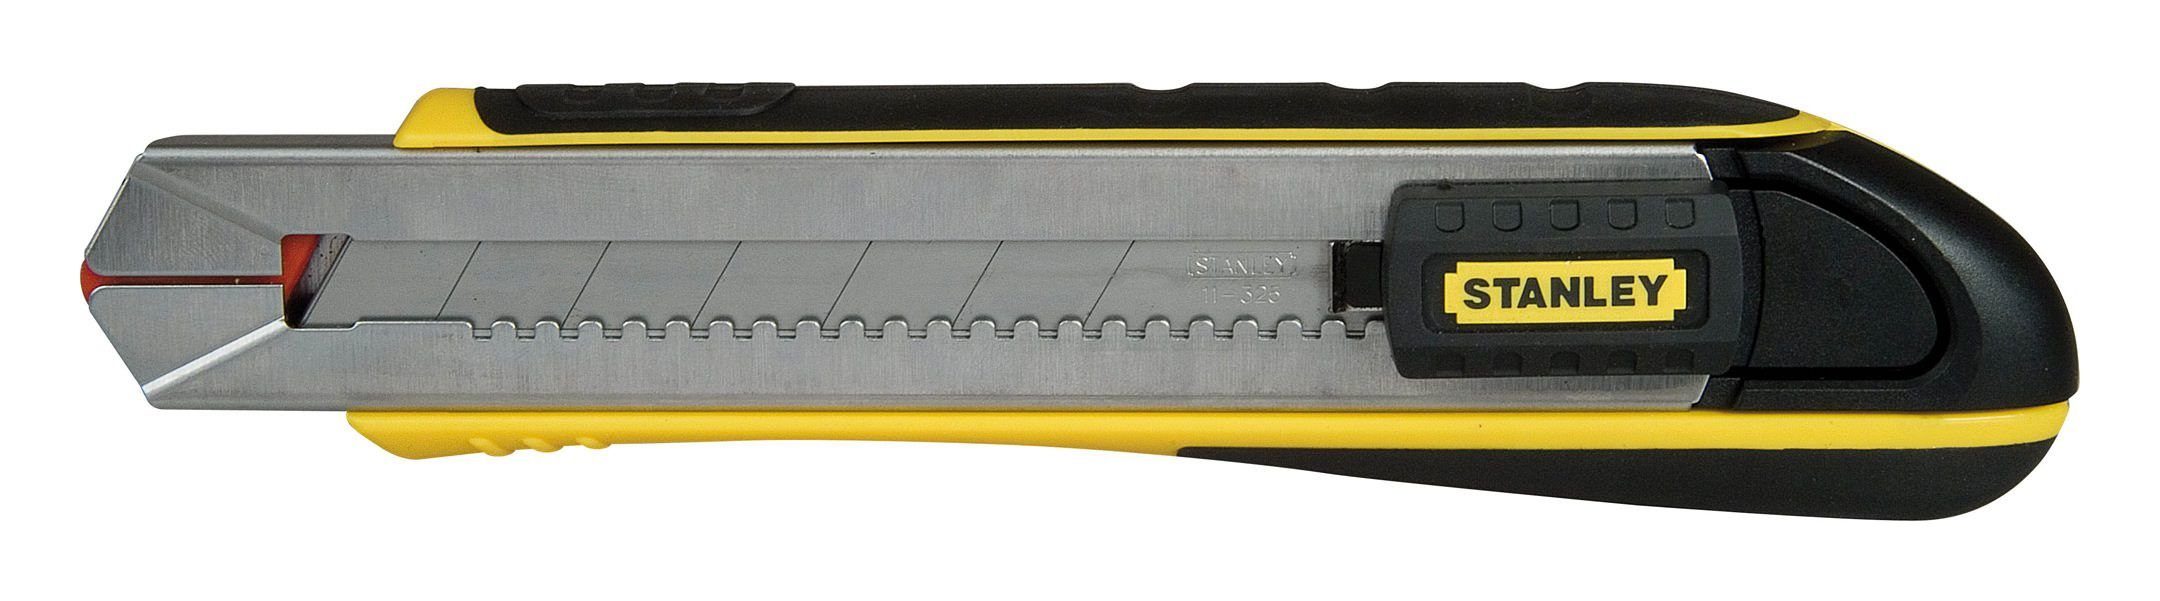 STANLEY Cuttermesser, Klinge: 2.5 cm, Fat Max Magazin 25 mm SB